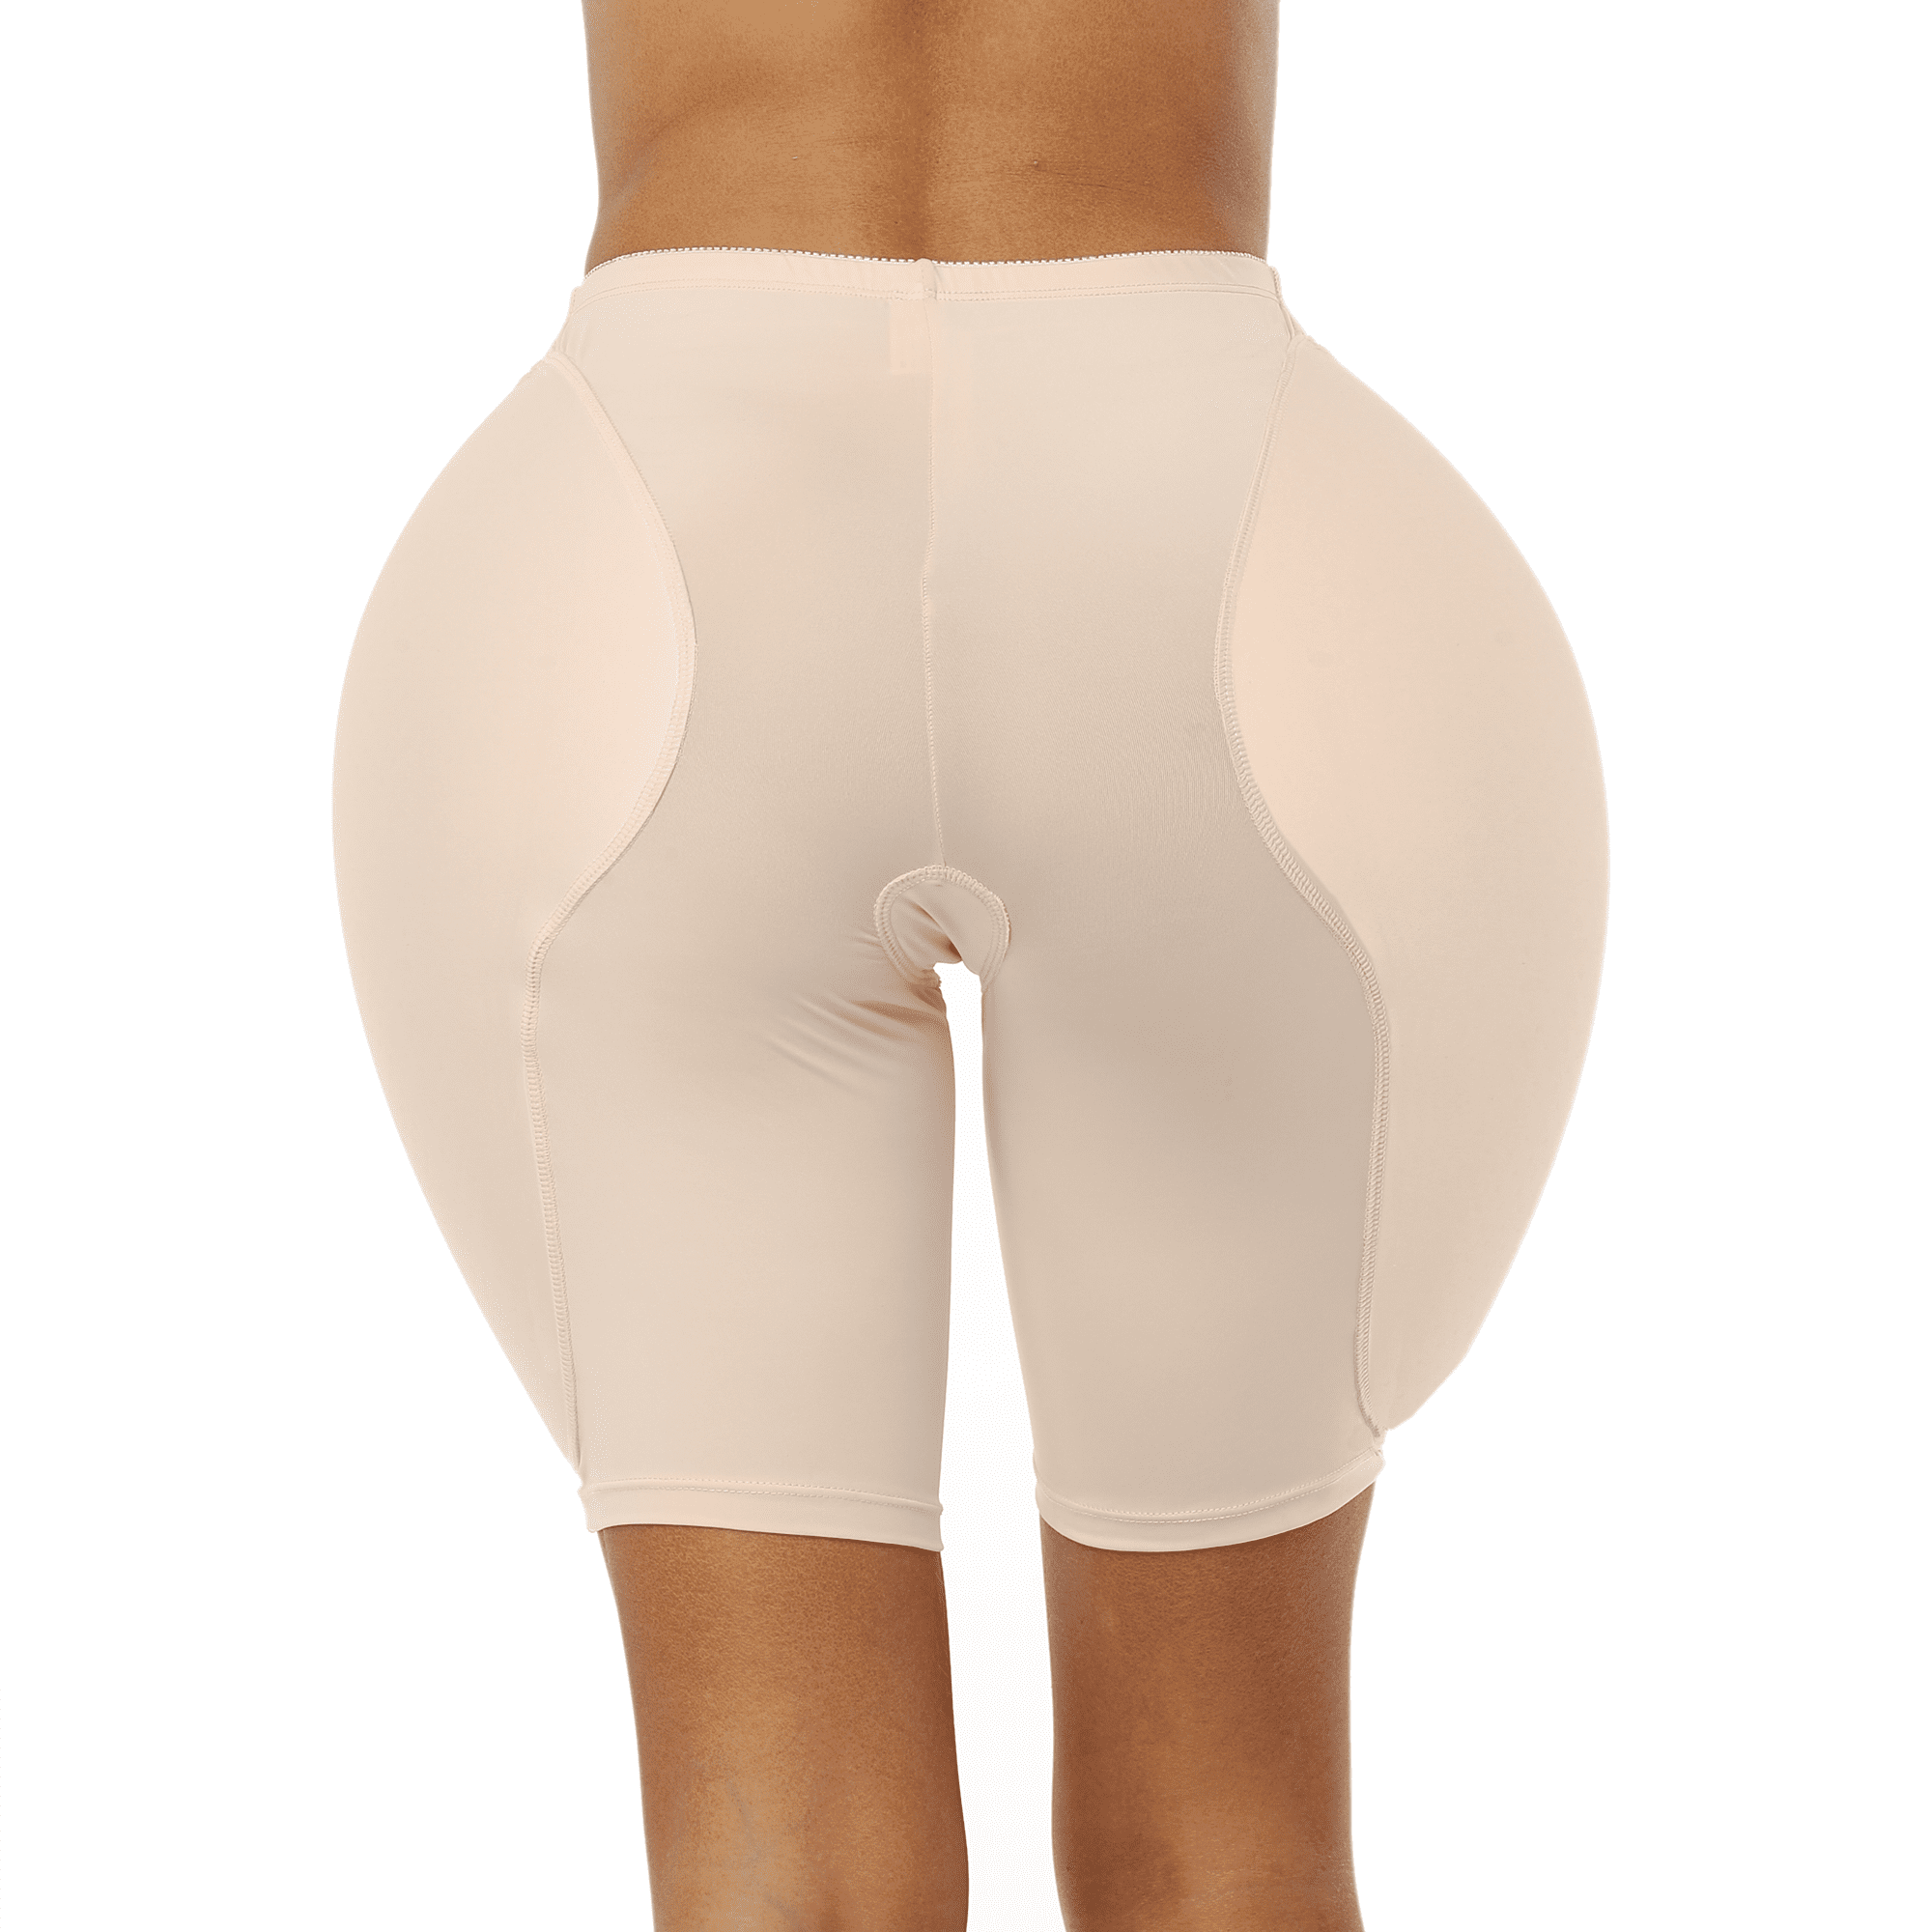 AOSBOEI Women Butt Lifer Padded Seamless Underwear Palestine